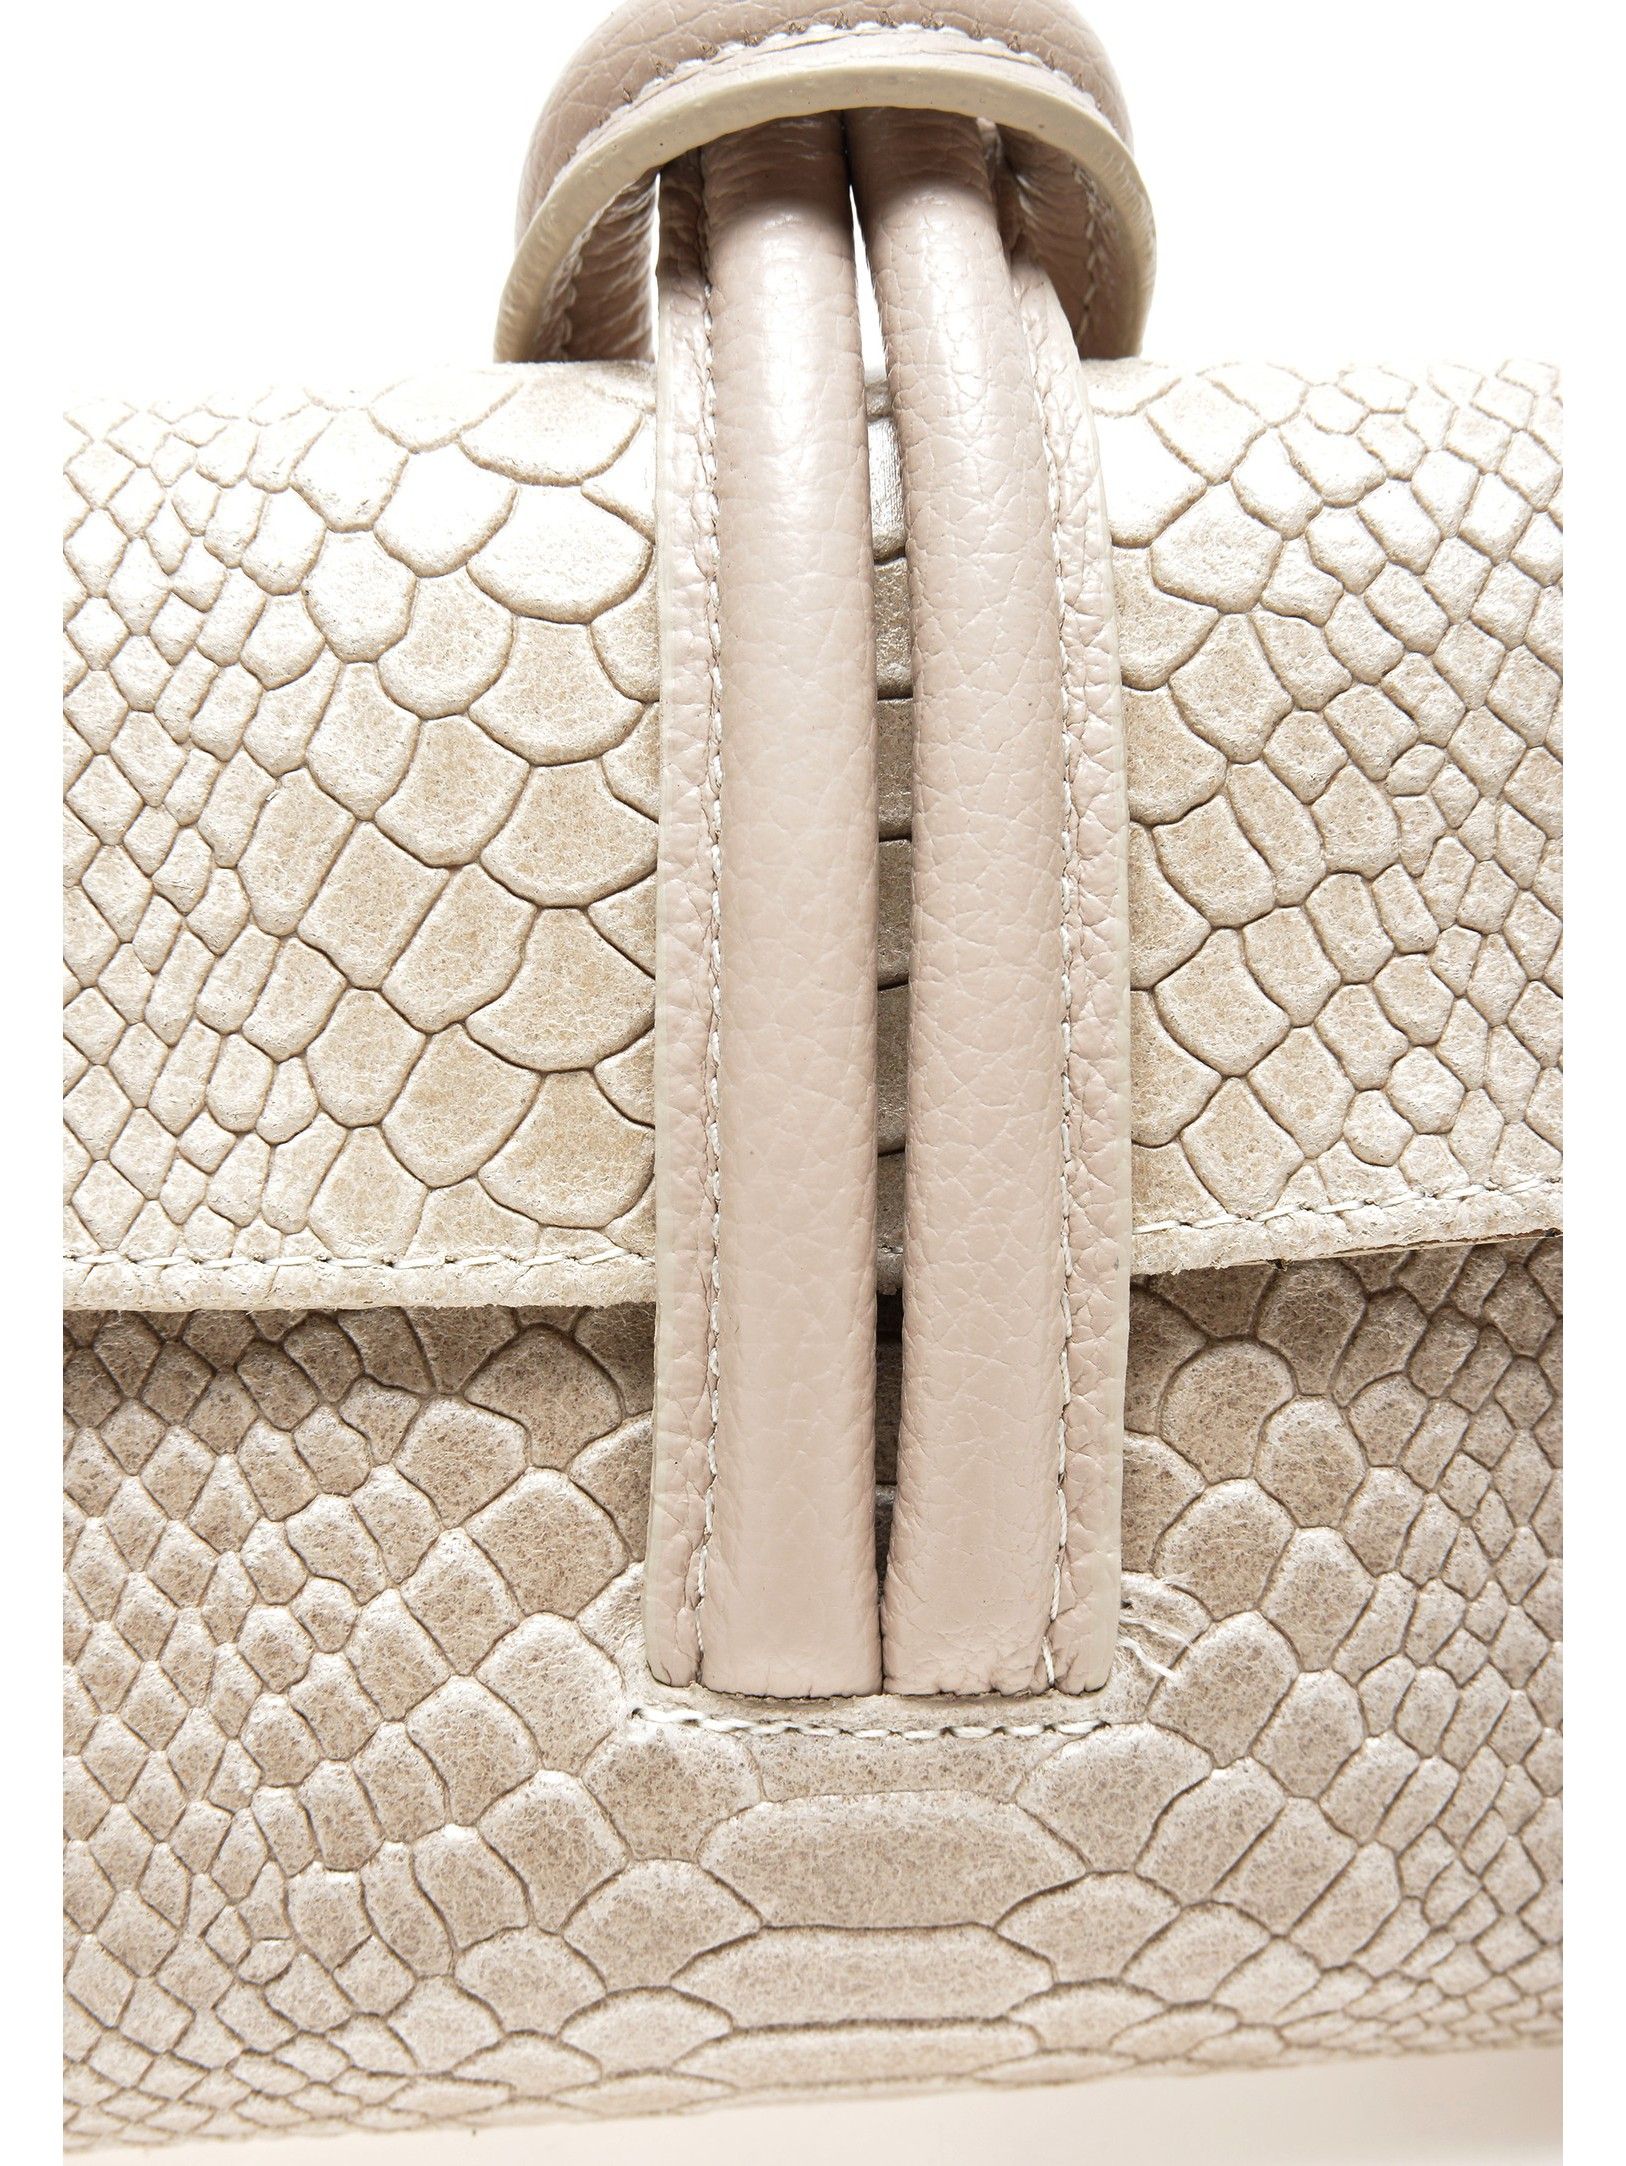 Handbag
100% cow leather
Strap closure
Interior zip pocket
Dimensions (L): 15x23x6 cm
Handle: /
Shoulder strap: 120 cm